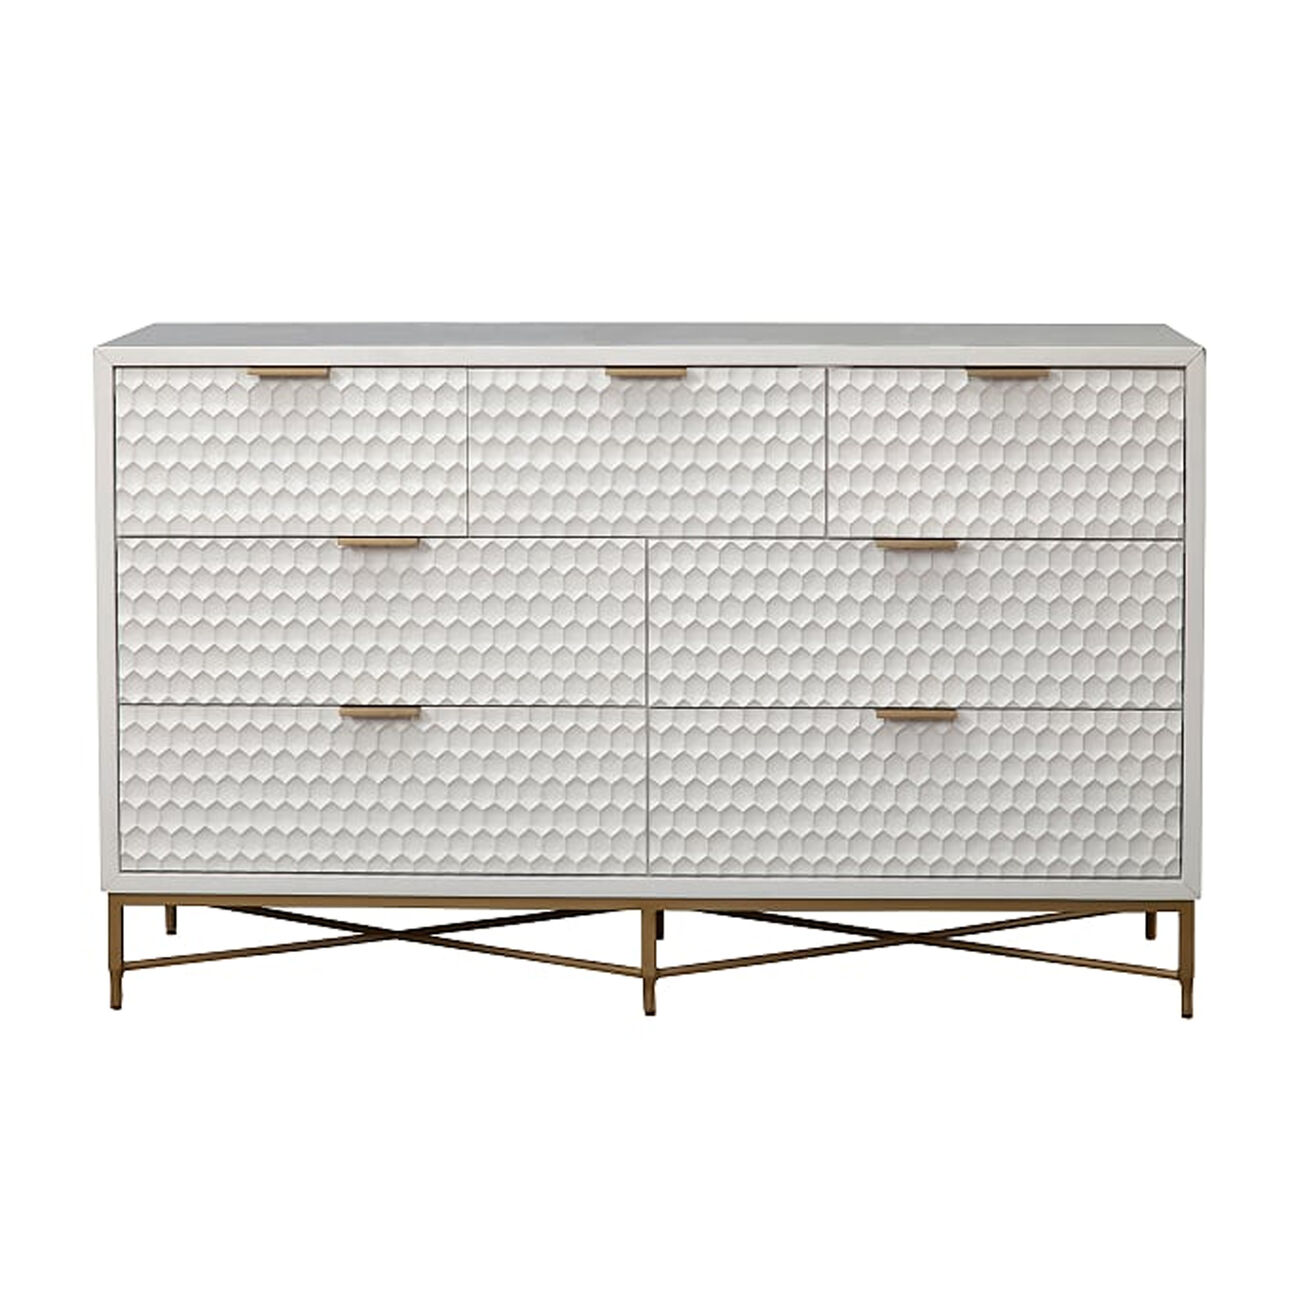 Honeycomb Design 7 Drawer Dresser with Metal Legs, White